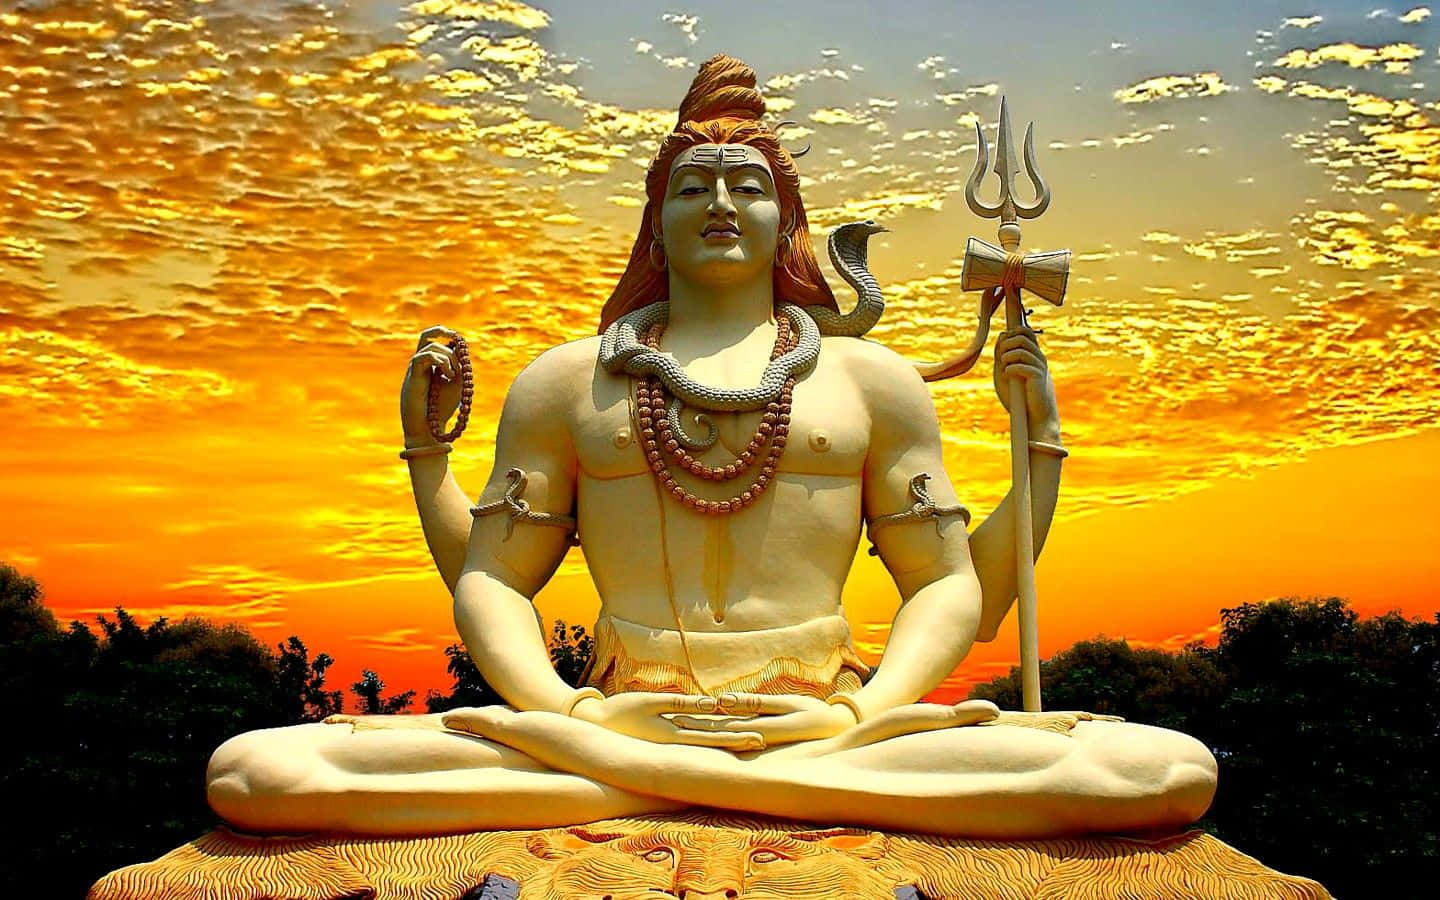 Enstatue Af Lord Shiva, Der Sidder I Lotuspositionen